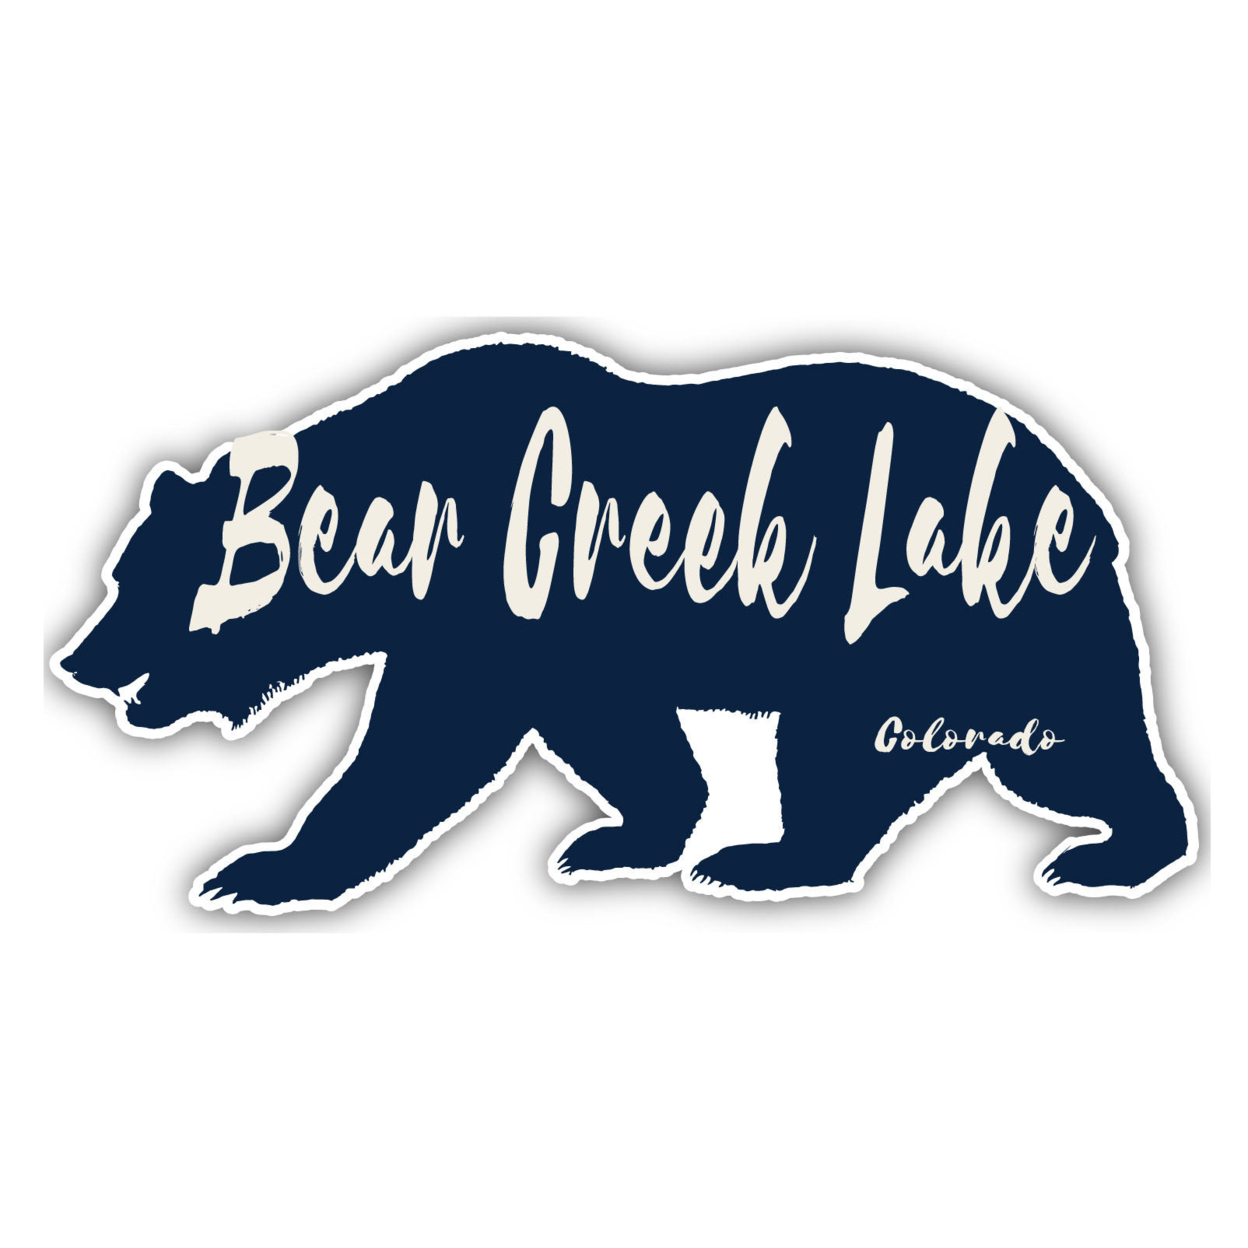 Bear Creek Lake Colorado Souvenir Decorative Stickers (Choose Theme And Size) - 4-Pack, 12-Inch, Bear